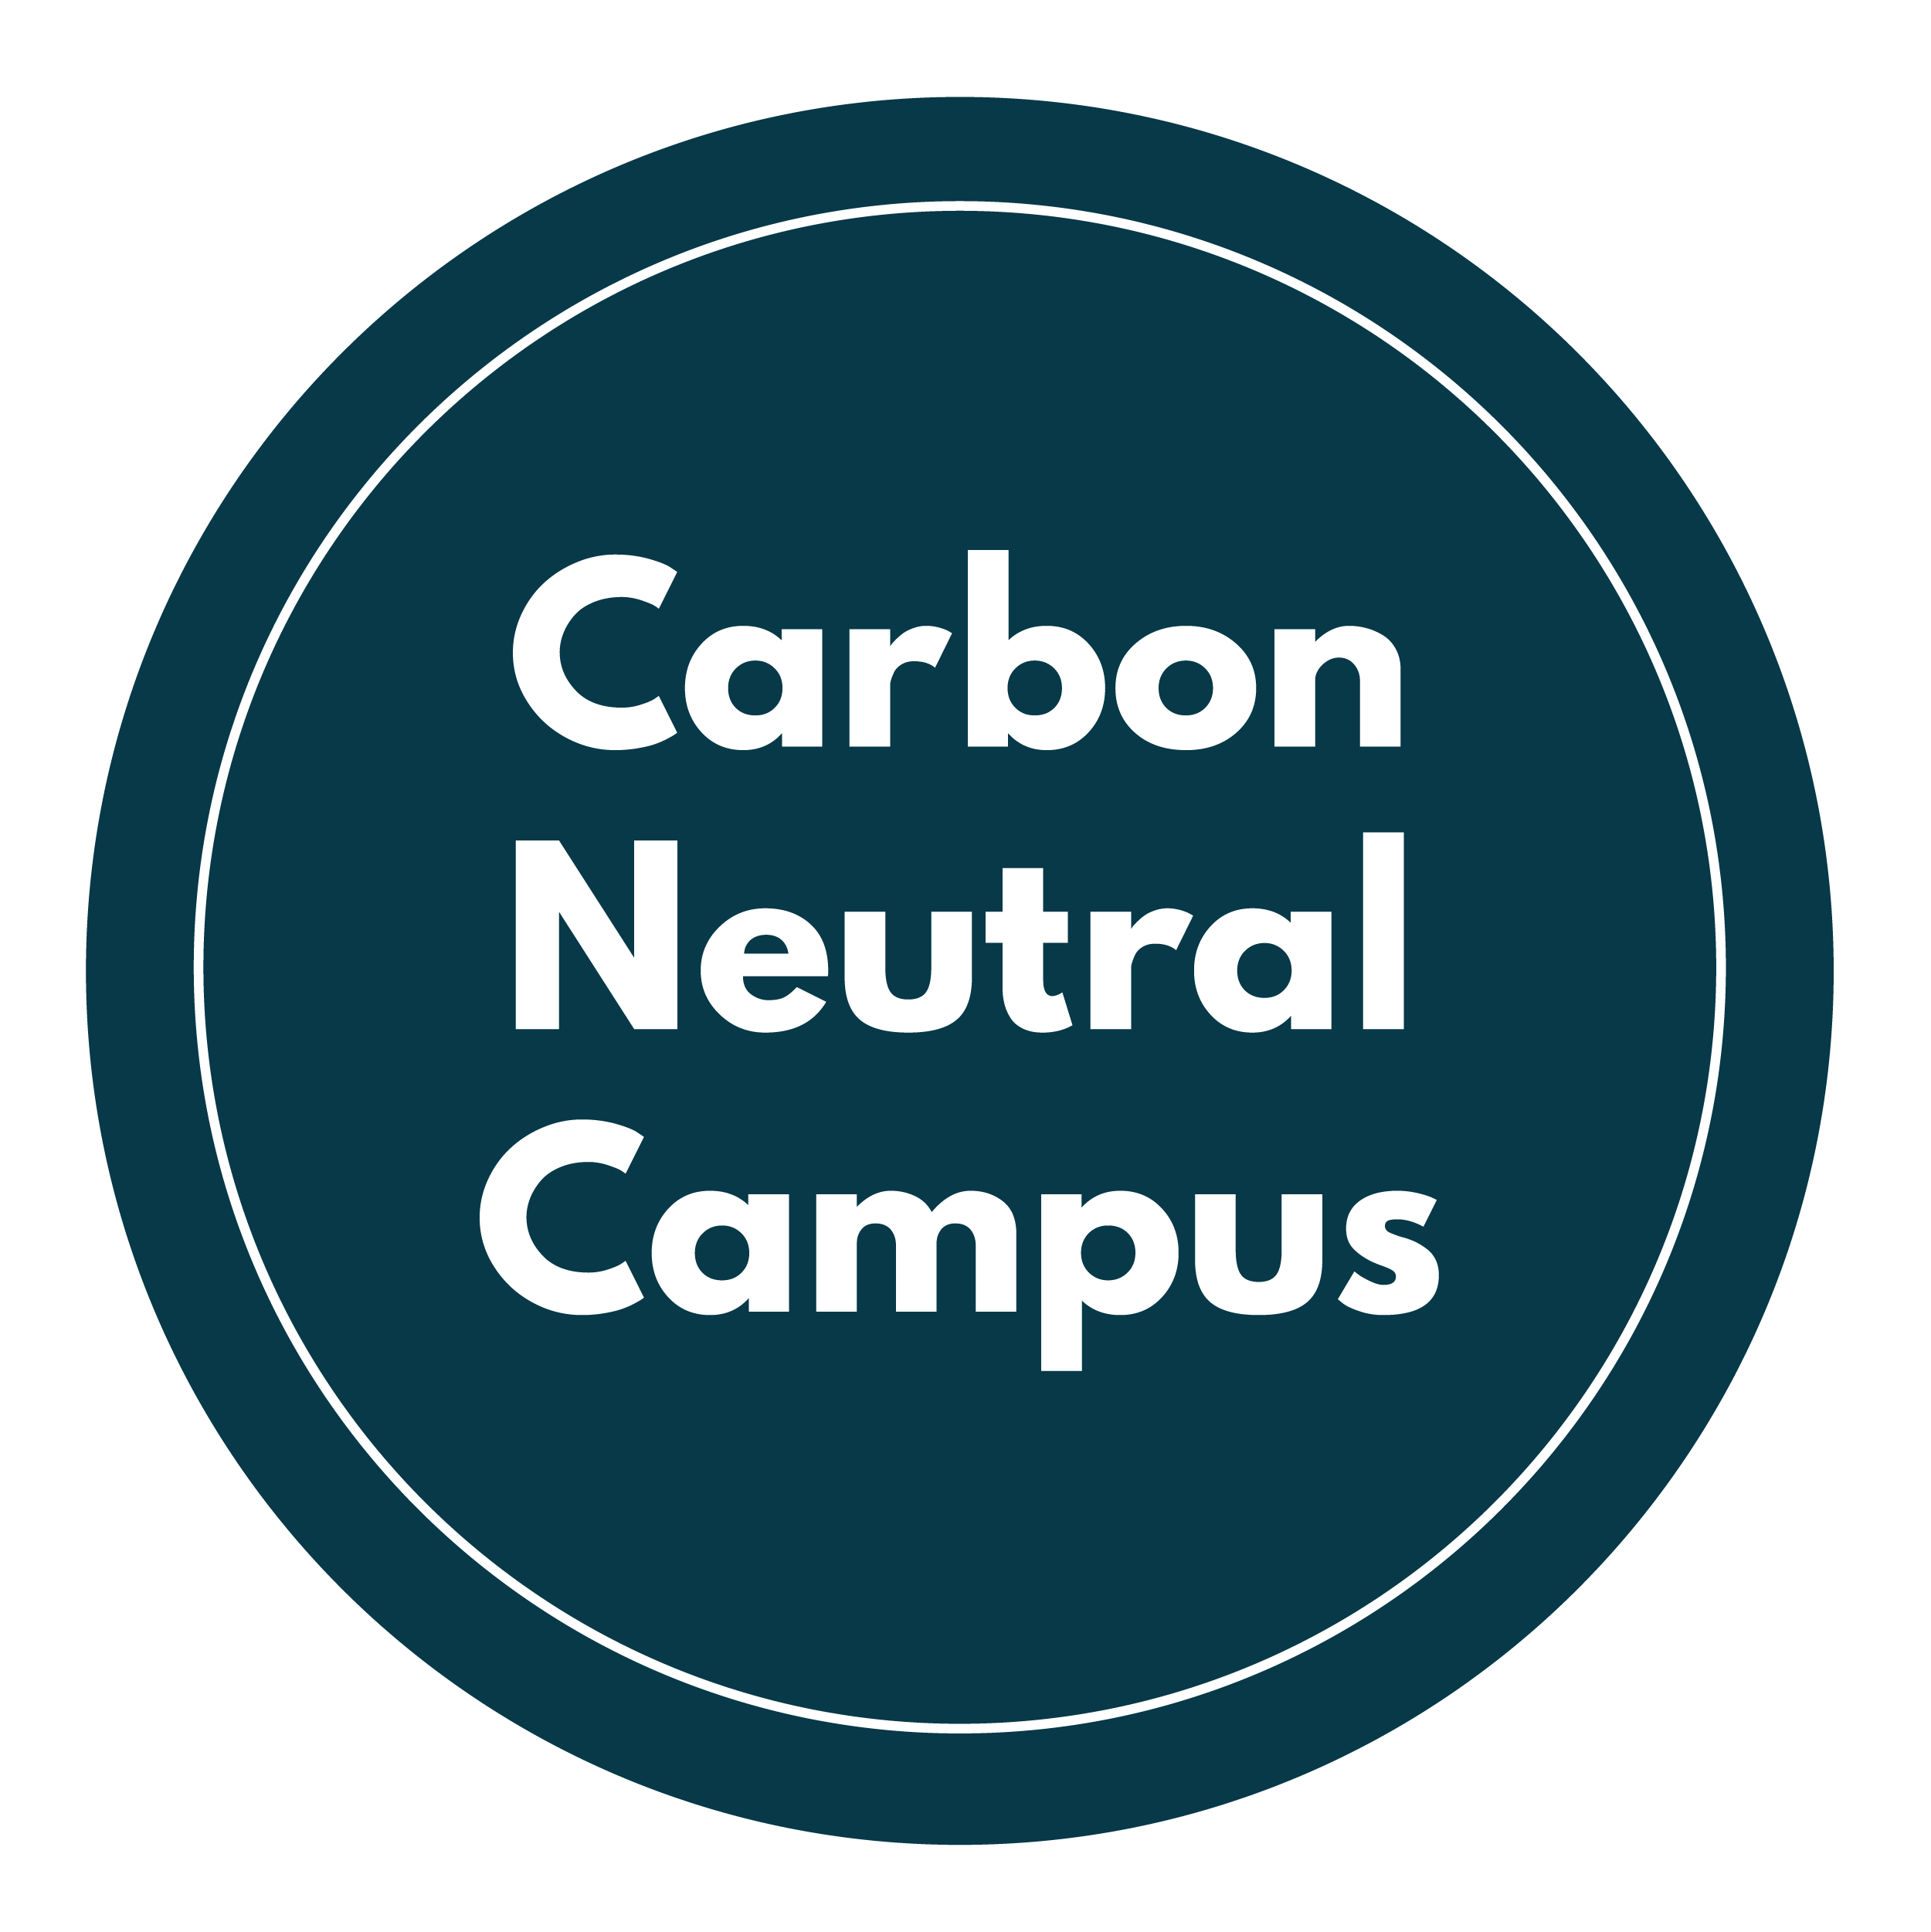 Carbon Neutral Campus